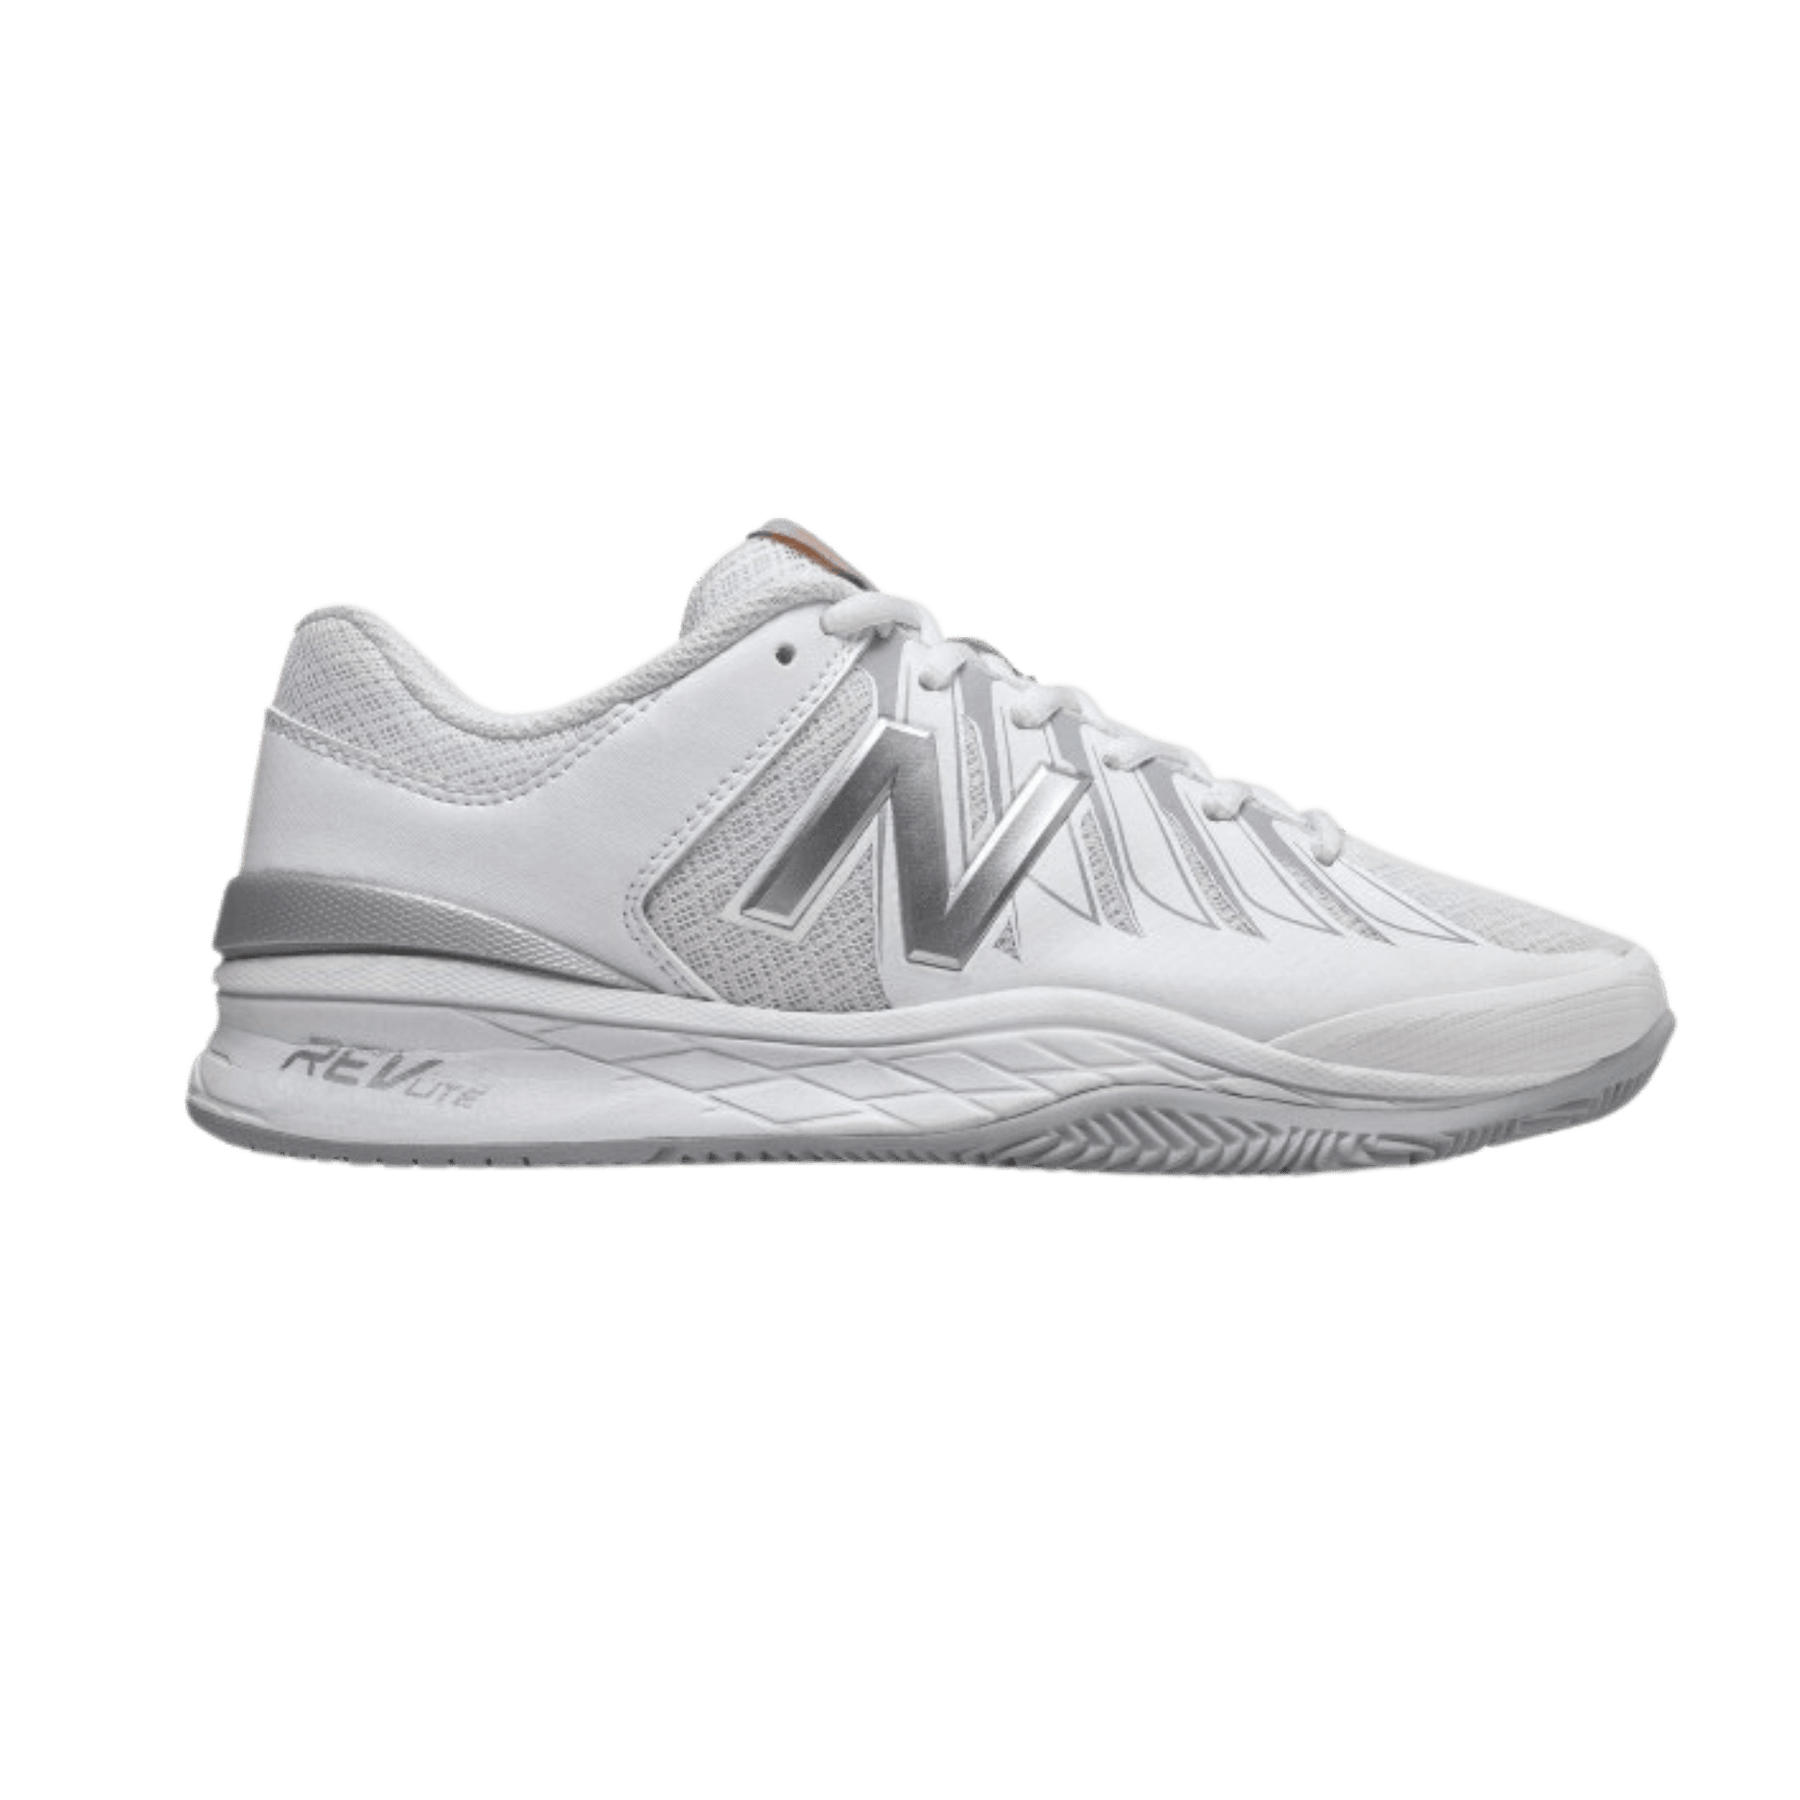 New Balance Women's 1006 Tennis Shoes